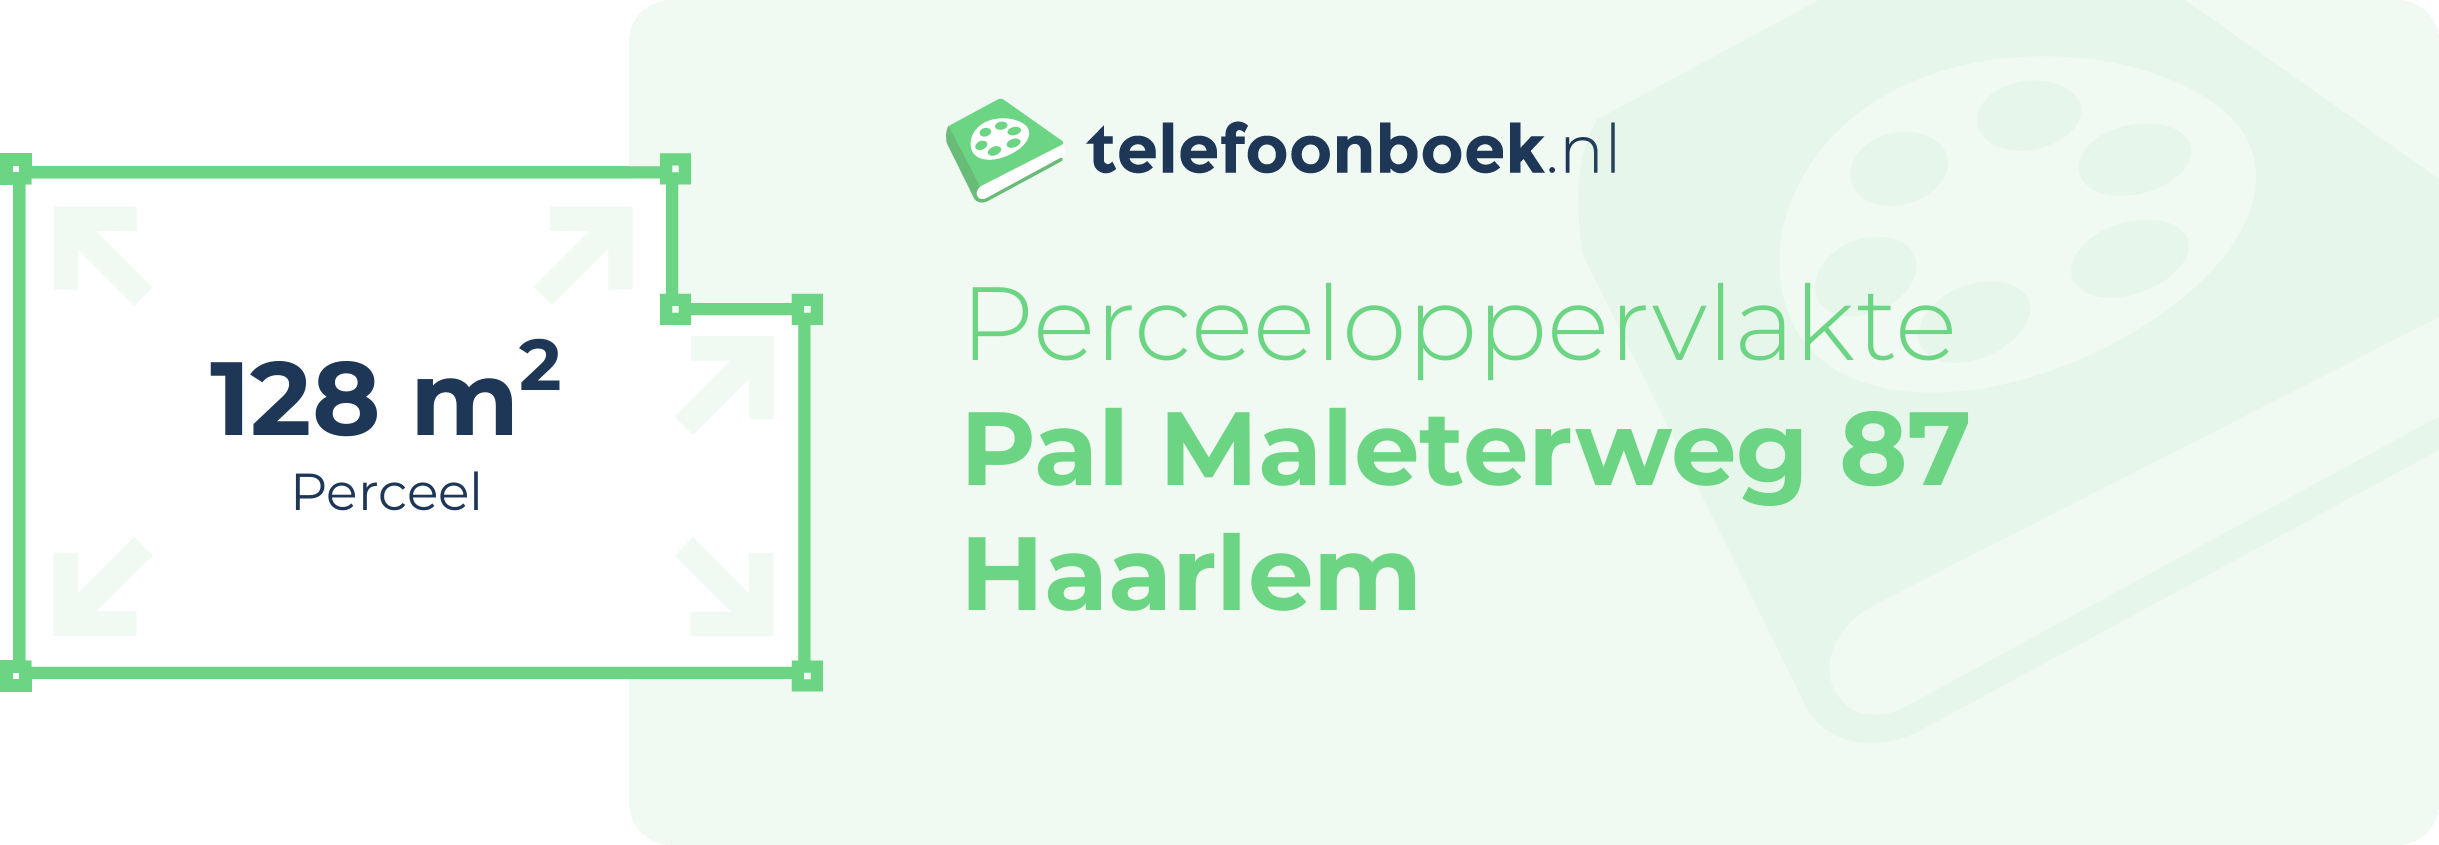 Perceeloppervlakte Pal Maleterweg 87 Haarlem